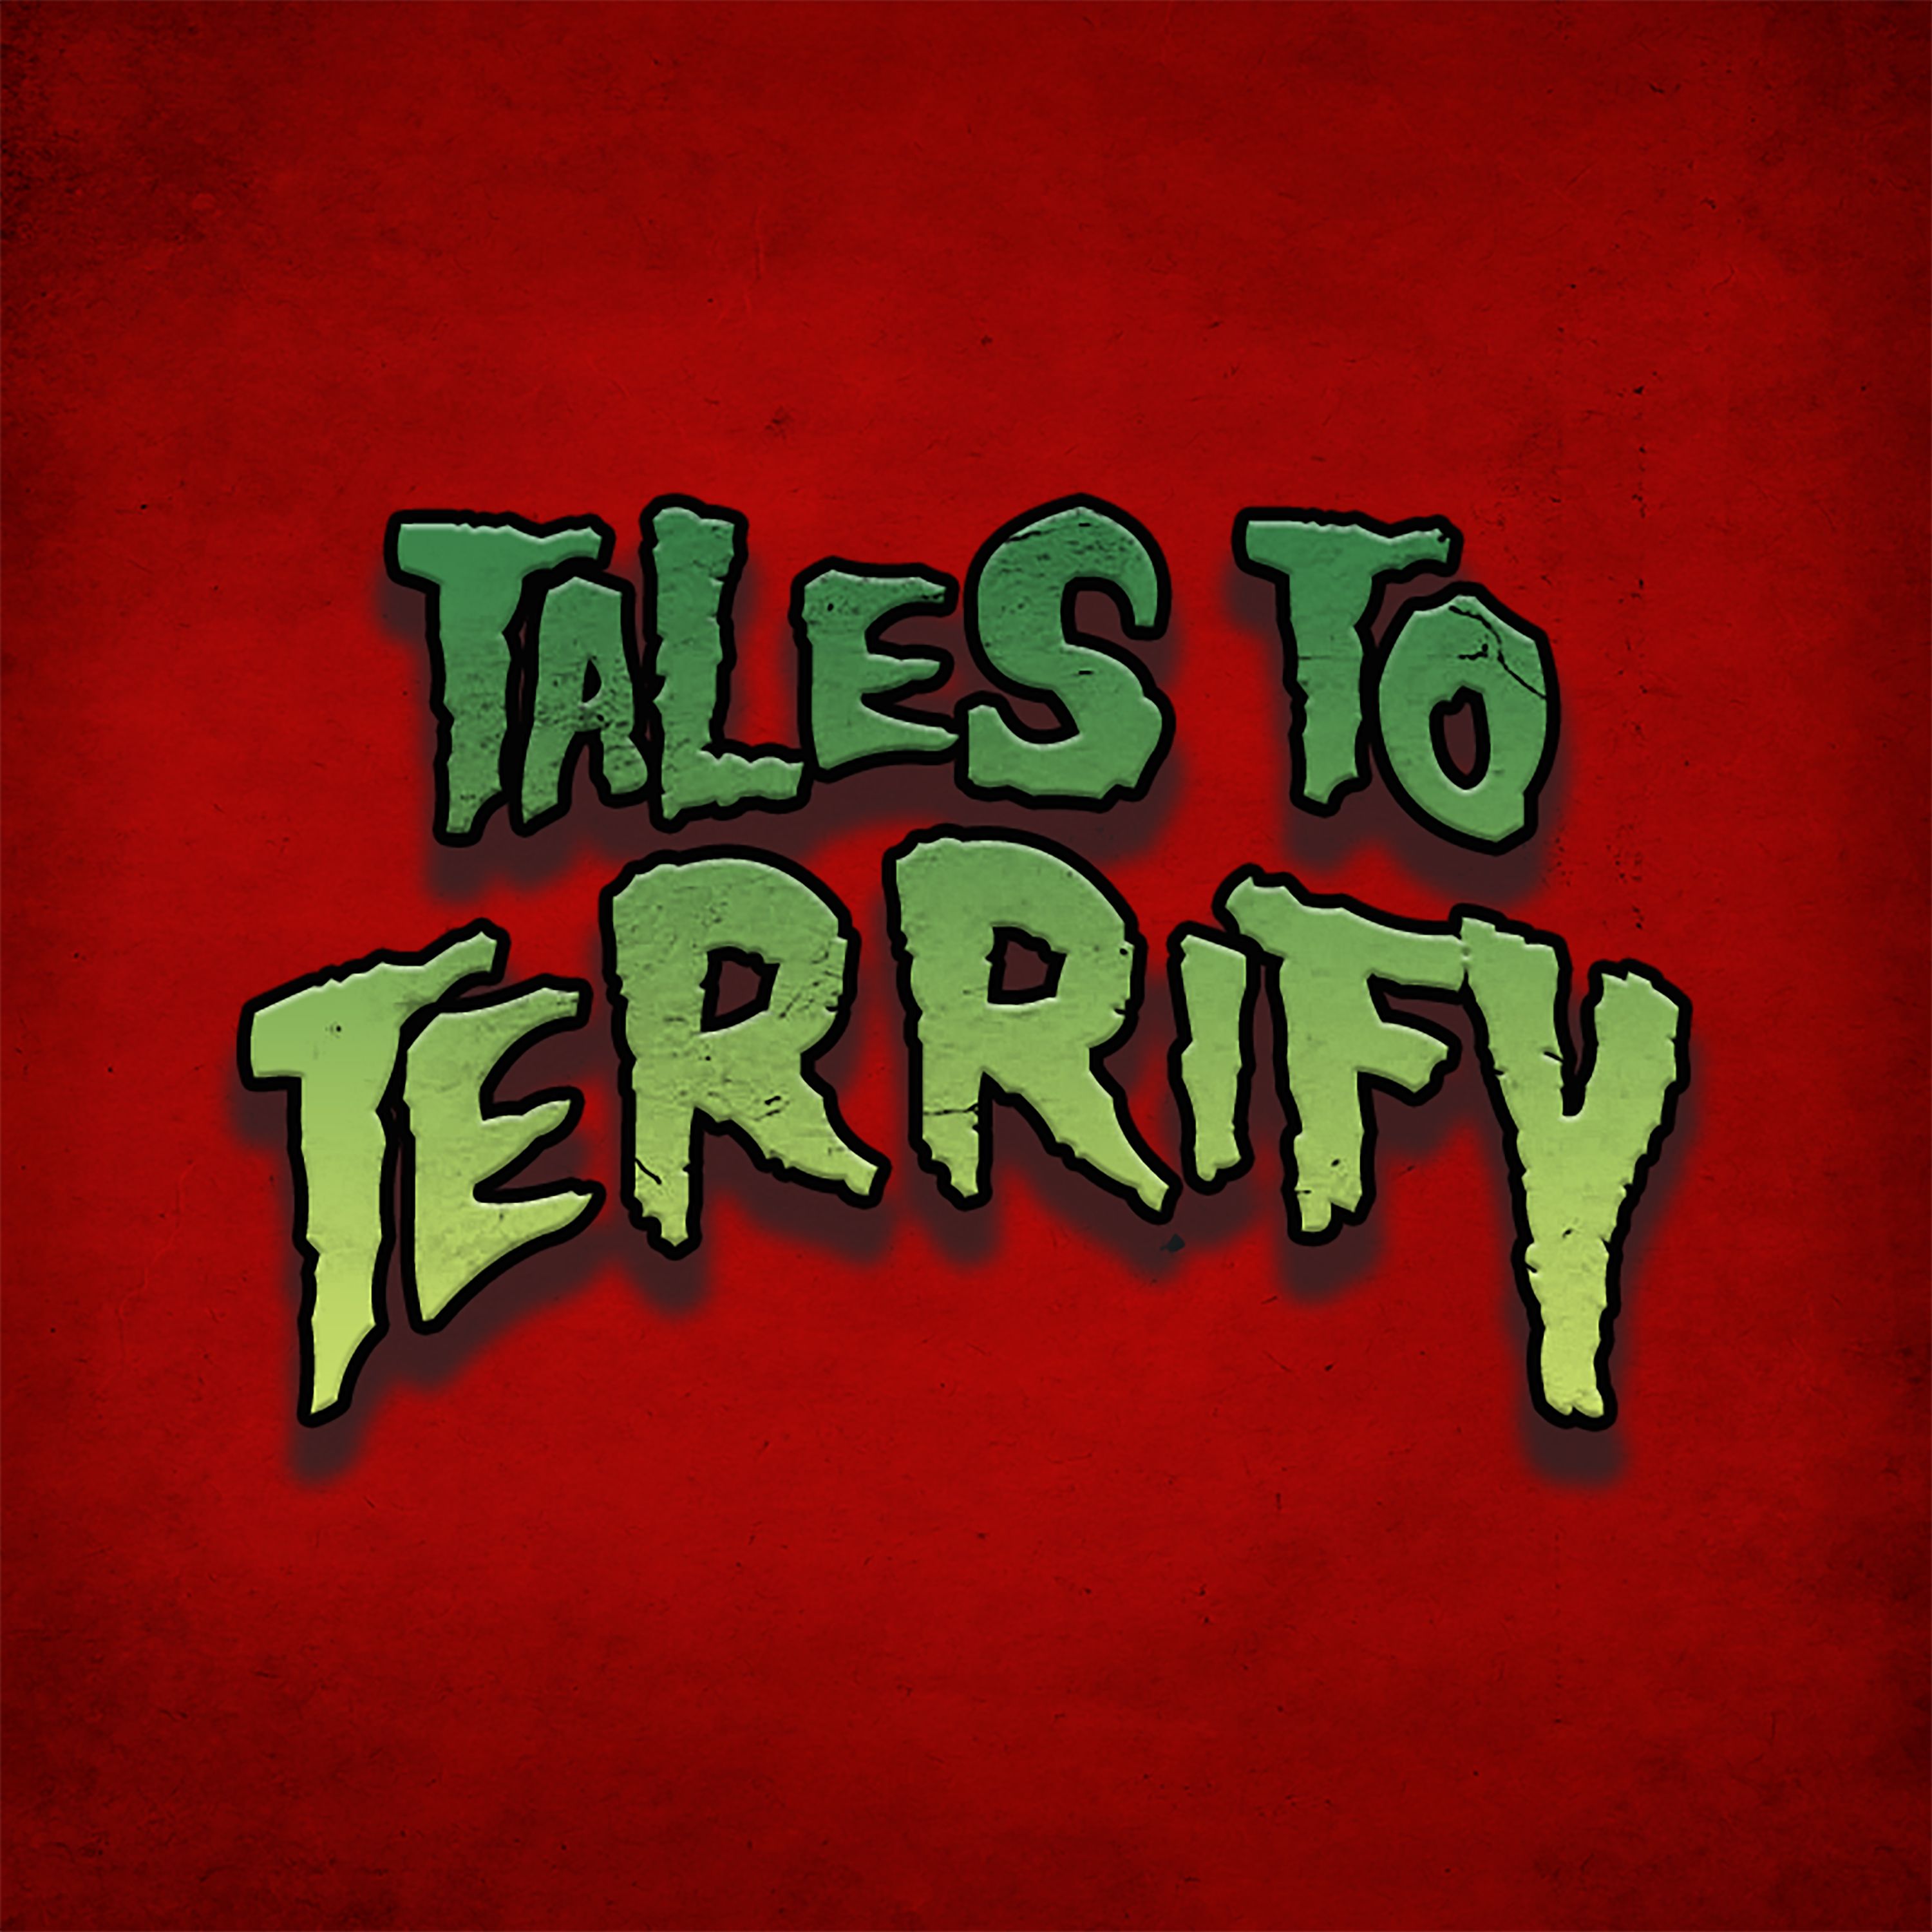 Tales to Terrify 451 Alex Ebenstein M. Regan